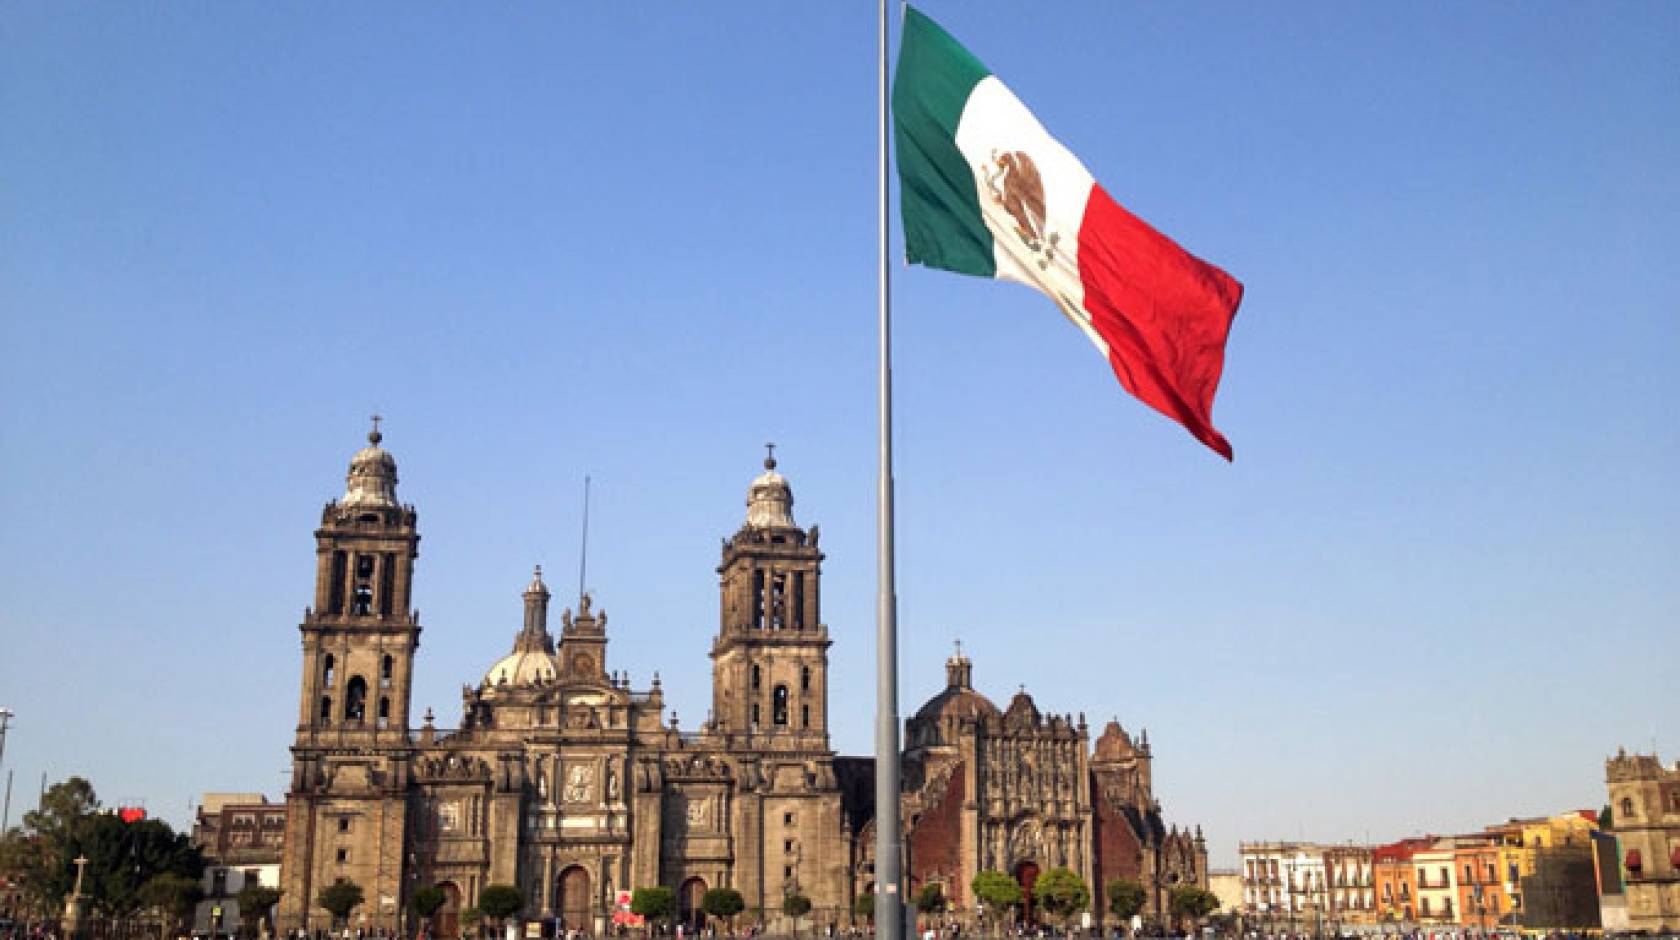 Zocalo Square Mexico City